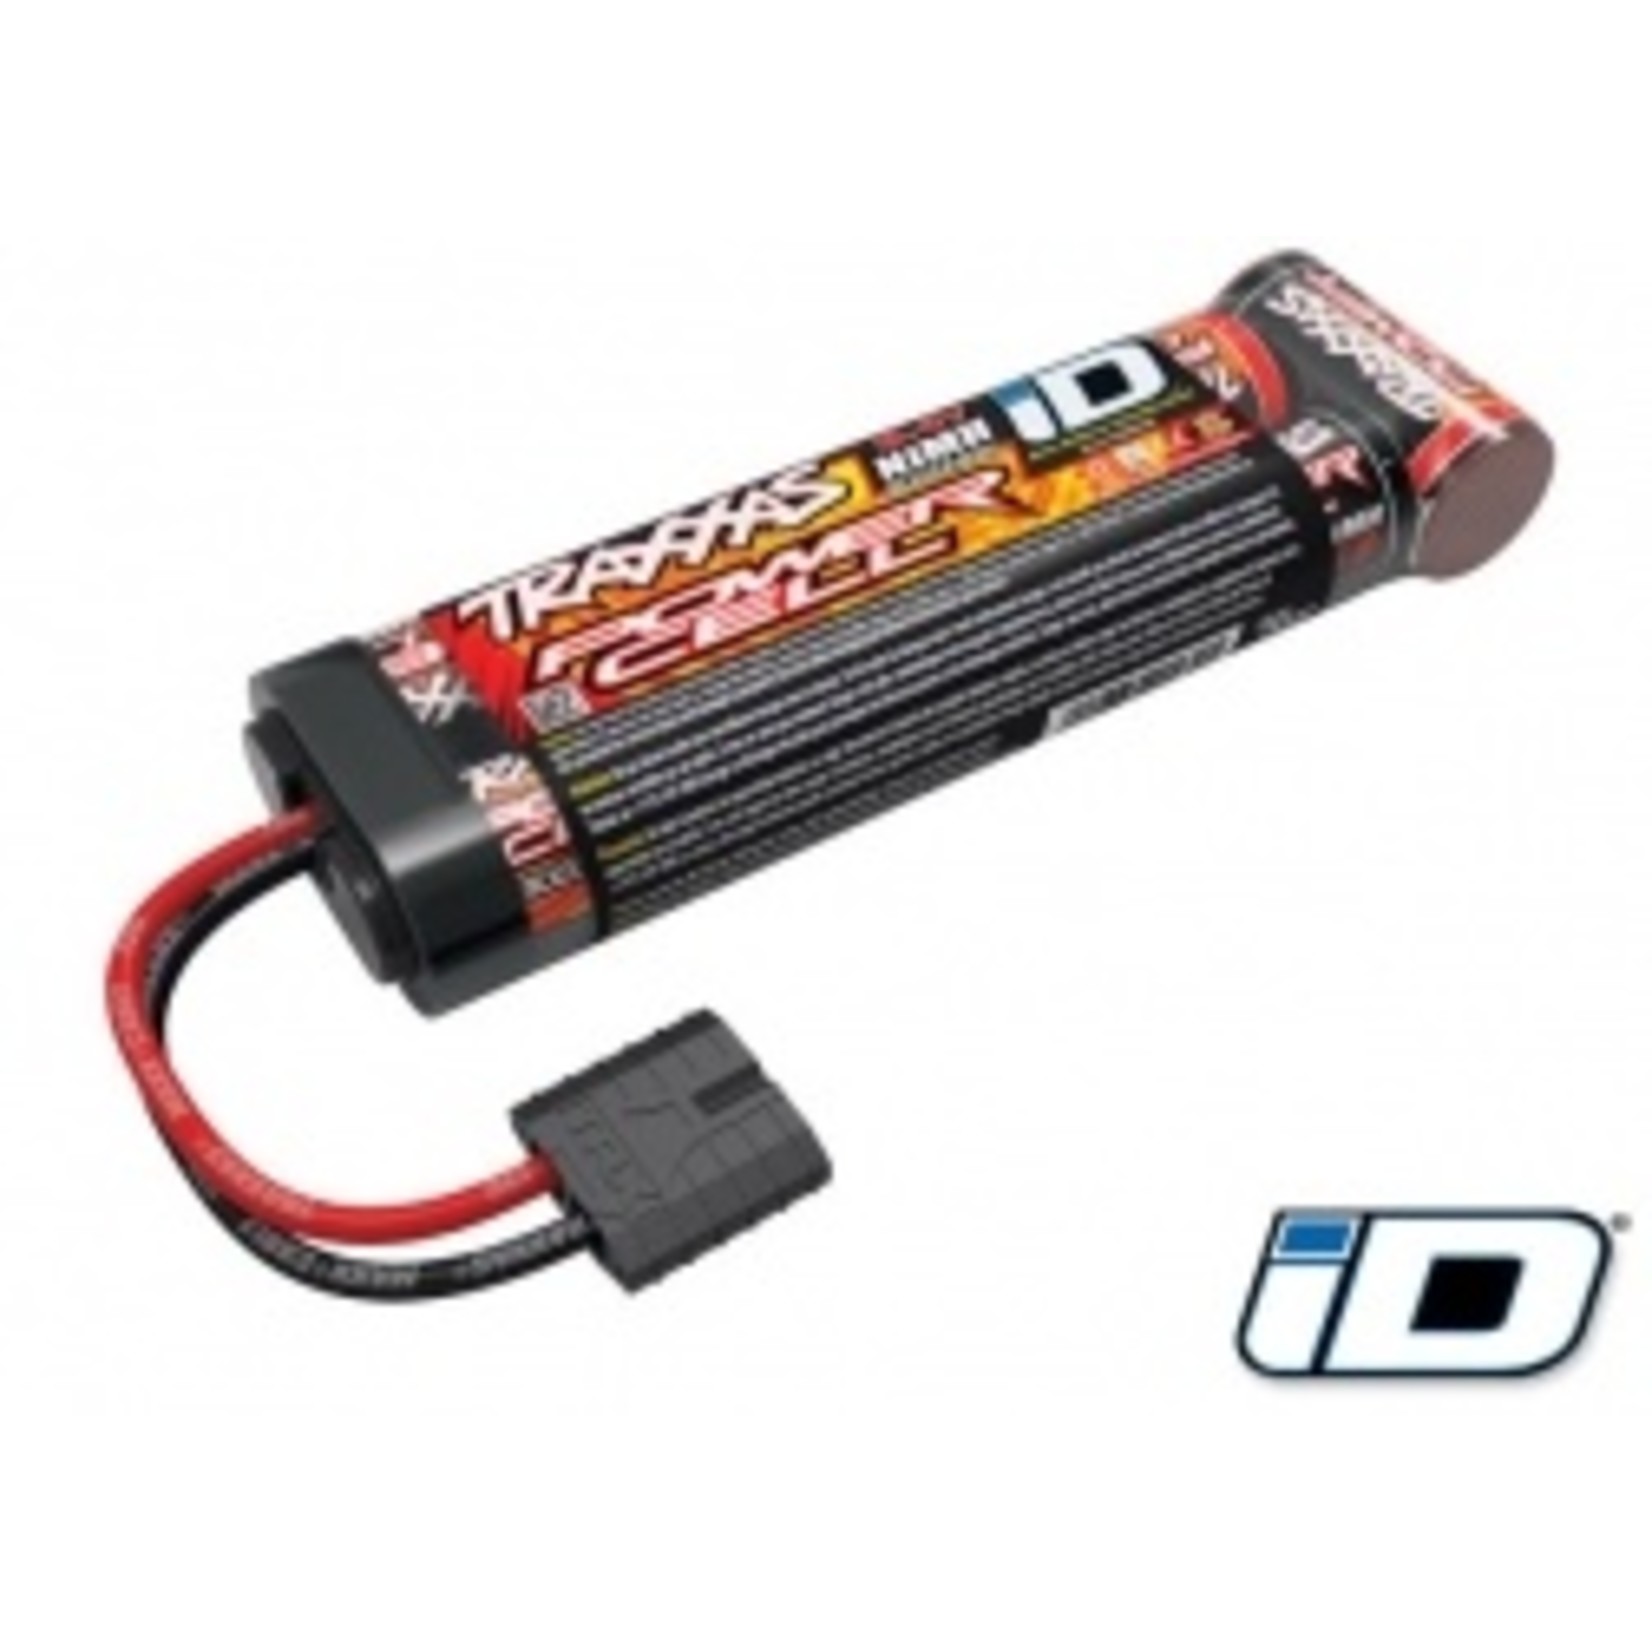 Traxxas 2923X Battery, Power Cell iD®, 3000mAh (NiMH, 7-C flat, 8.4V)